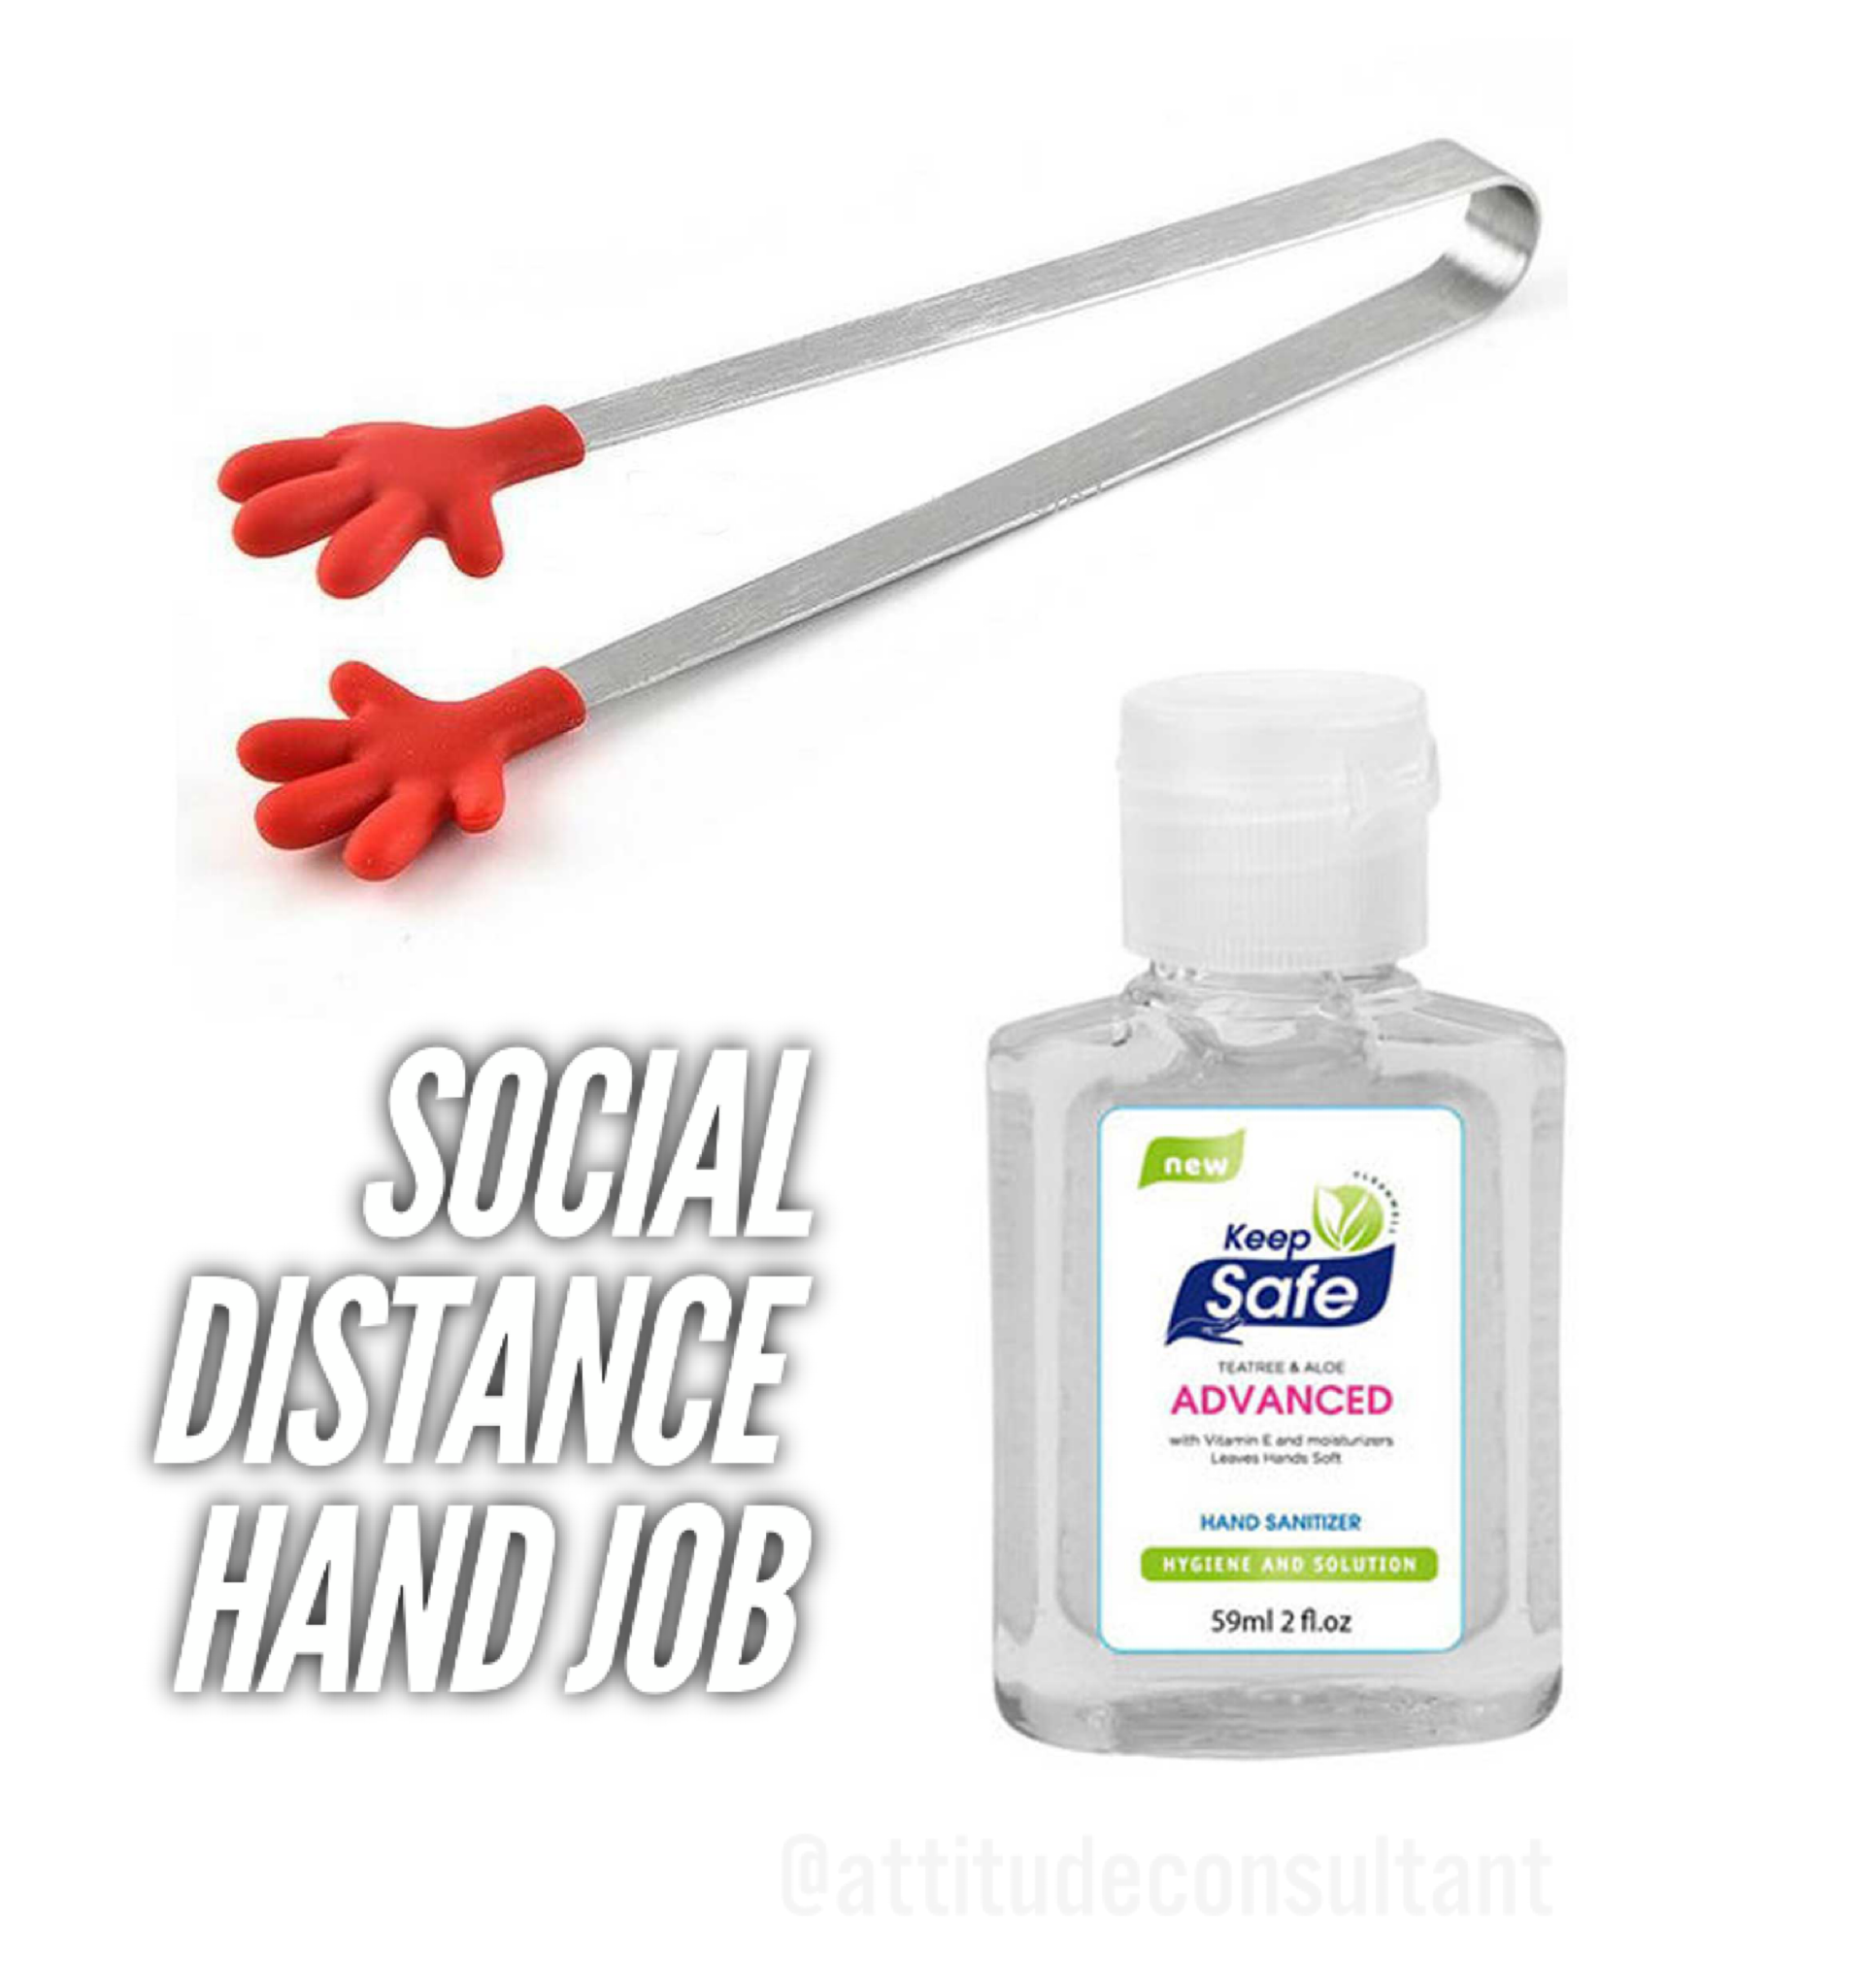 Social Distance Hand Job